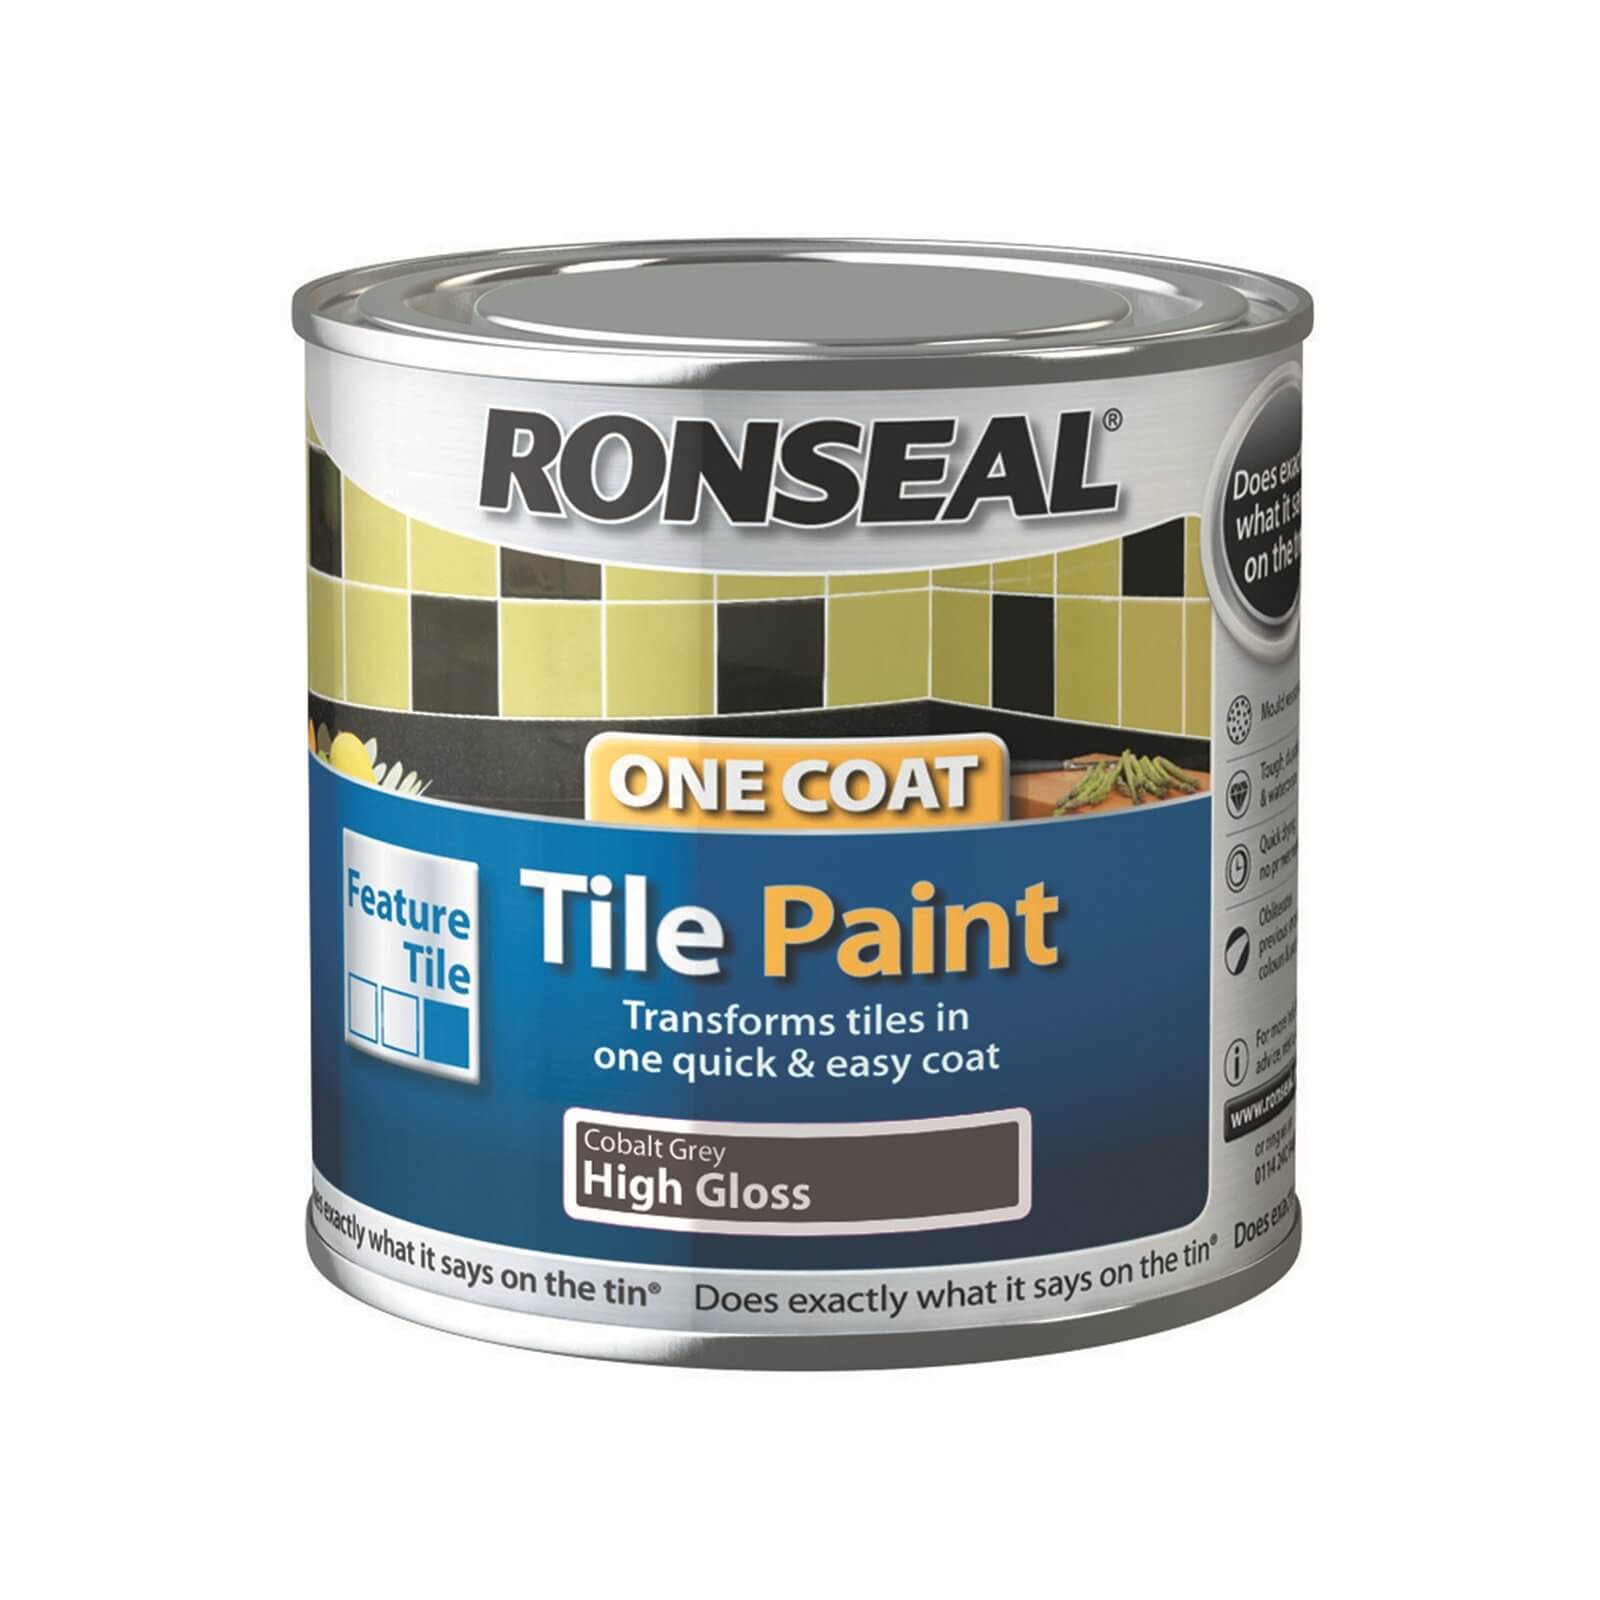 Ronseal One Coat Tile Paint Cobalt Grey High Gloss - 250ml